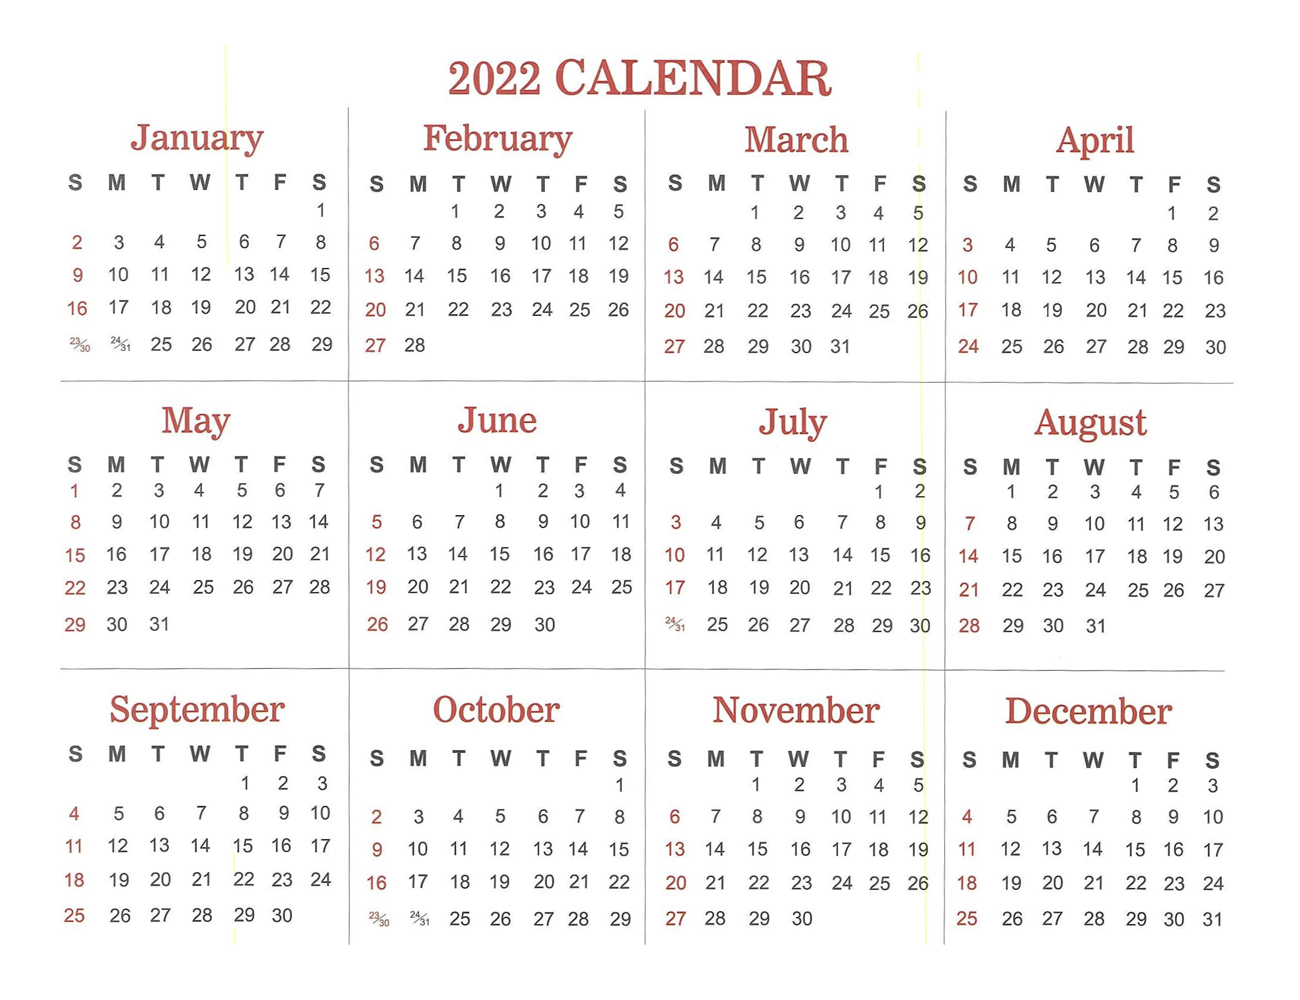 Back Cover: 2021 The Peoples Gospel Hour Calendar